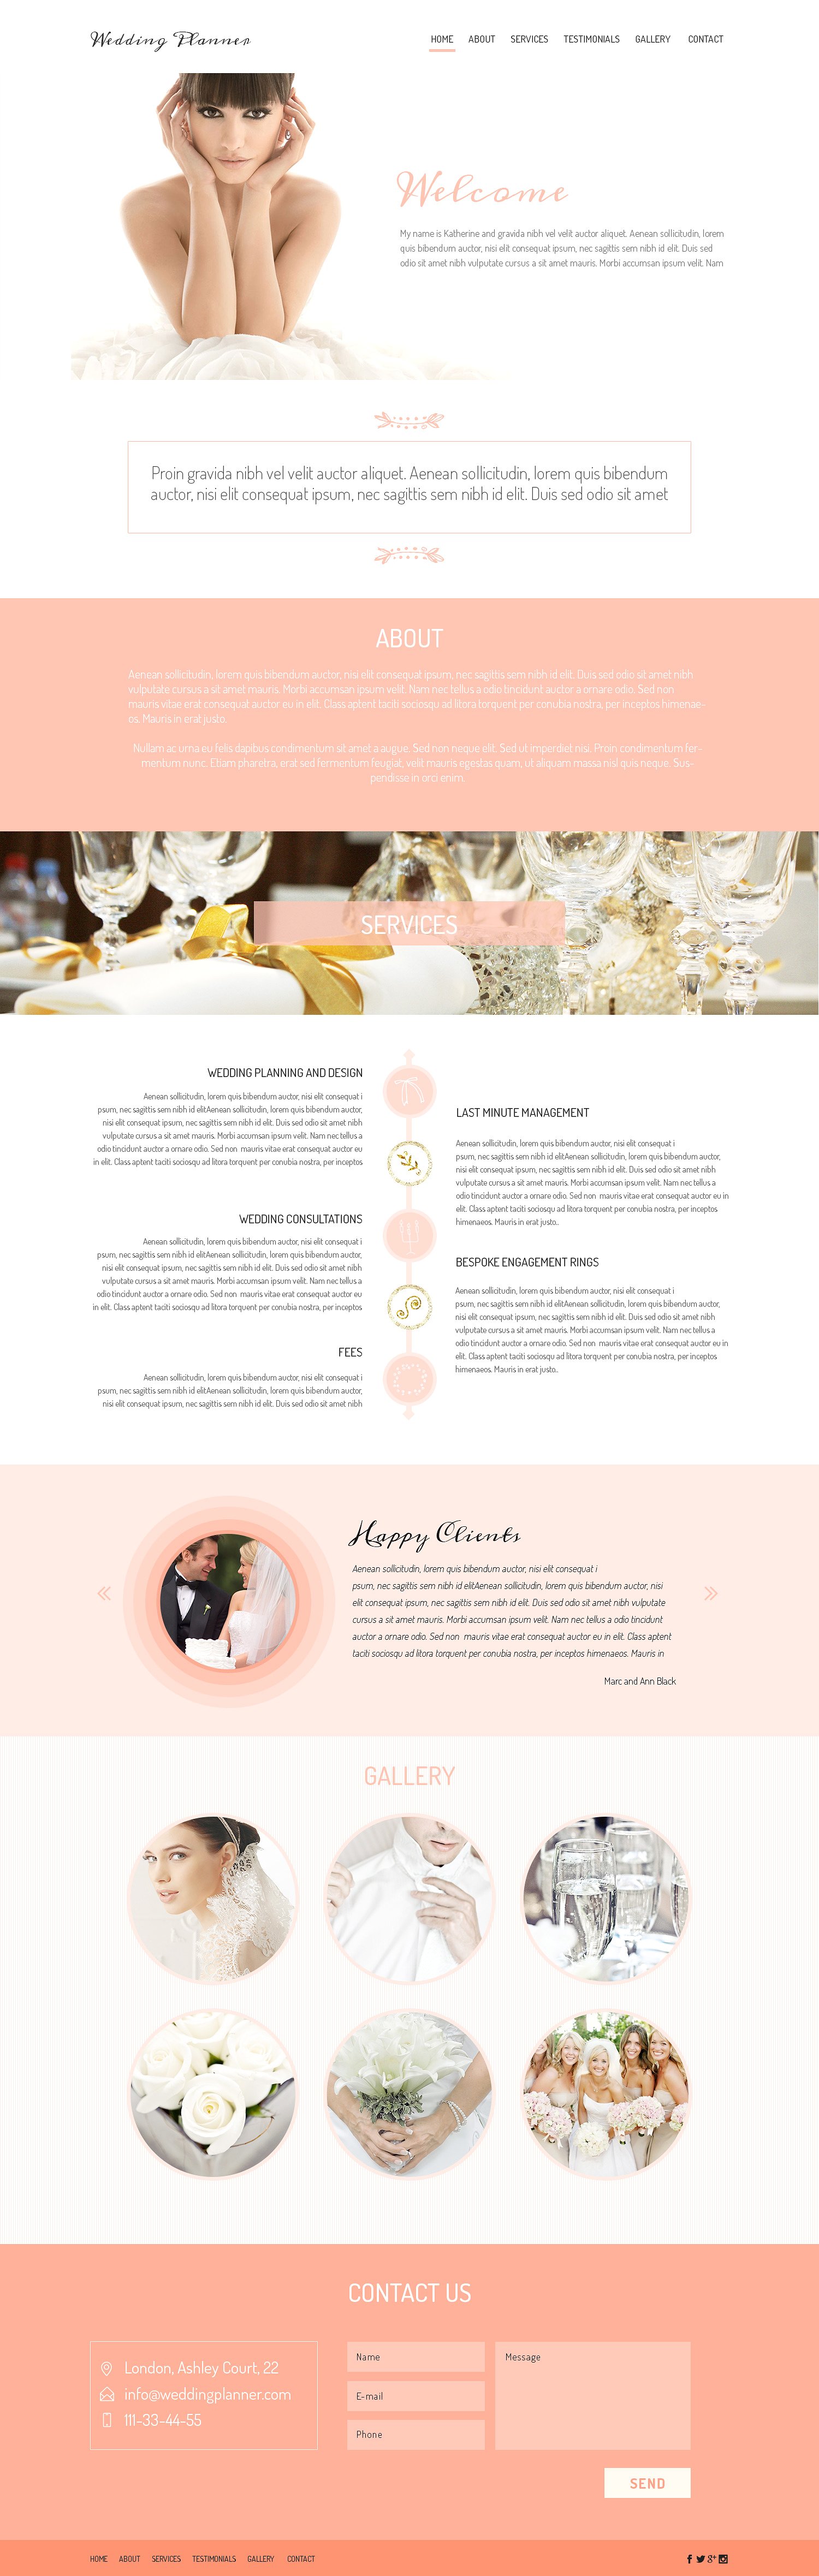 One page design - Wedding Plan